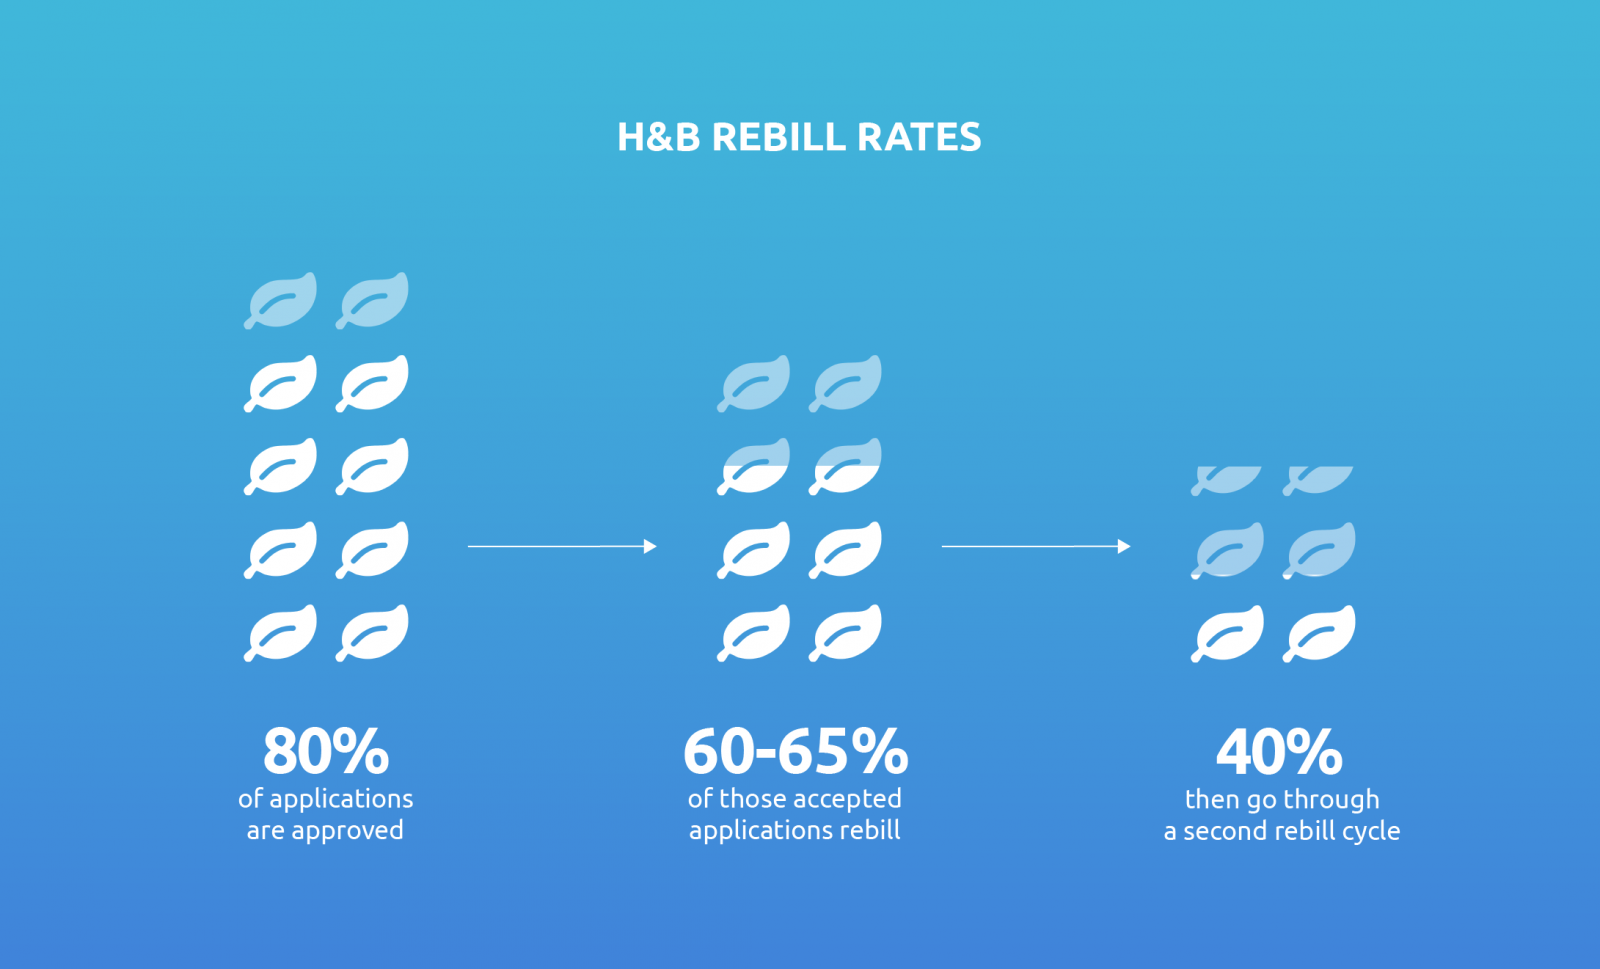 h&b rebill rates